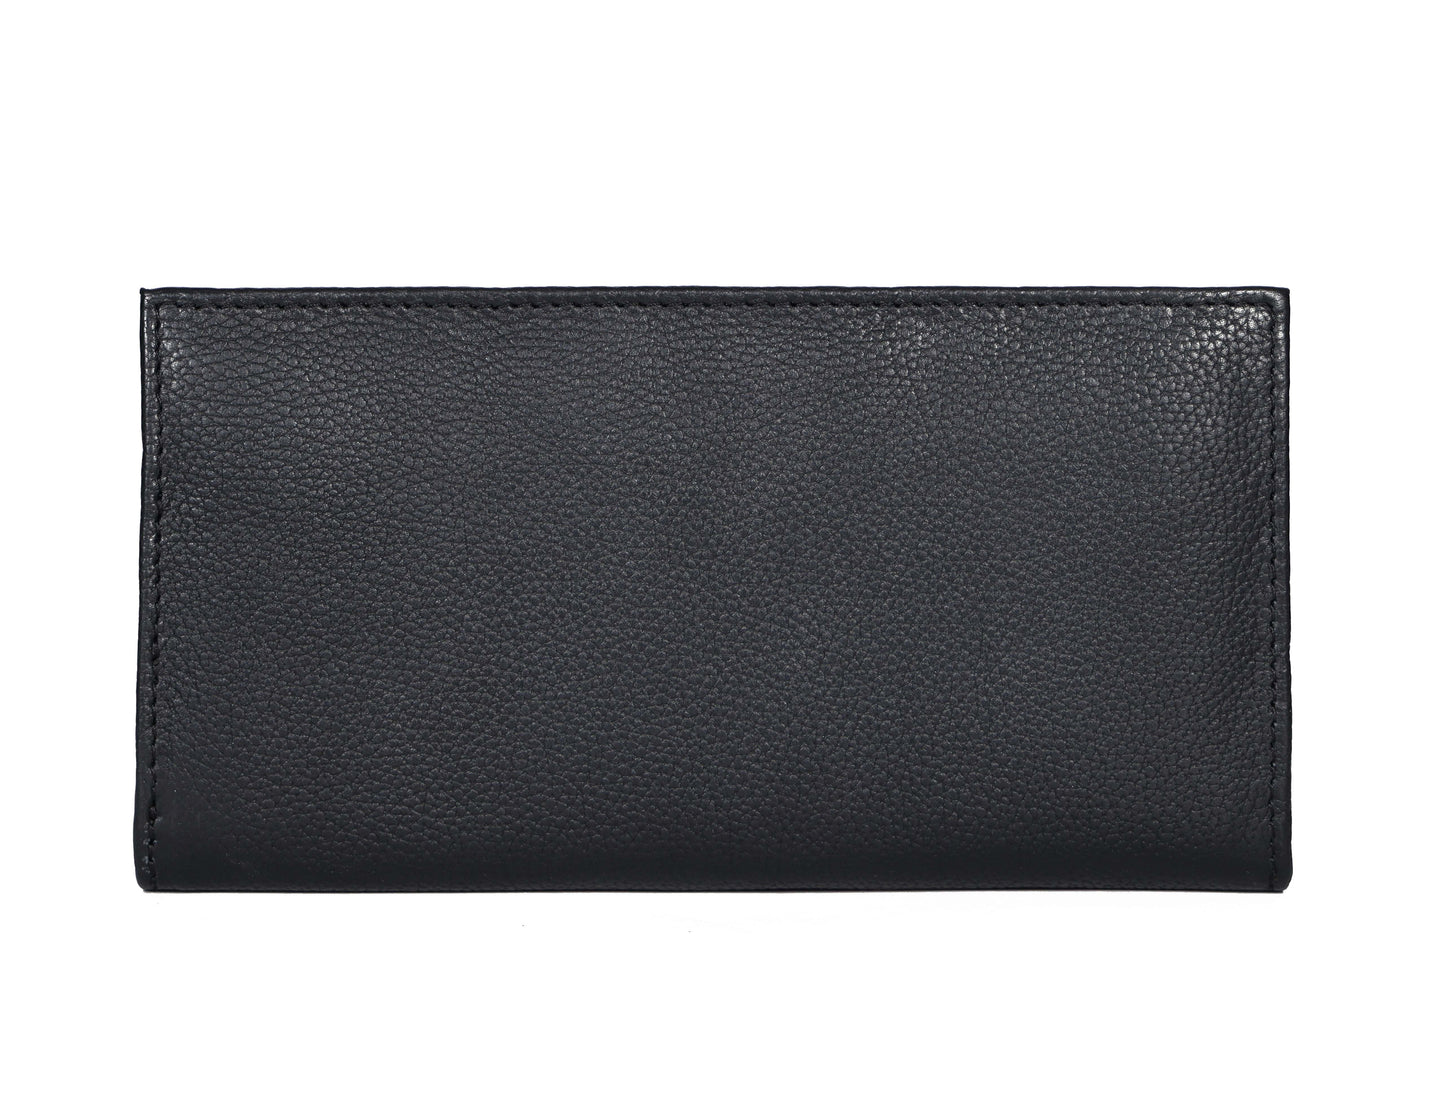 Timeless Elegance: Black Leather Clutch for Effortless Style. - CELTICINDIA